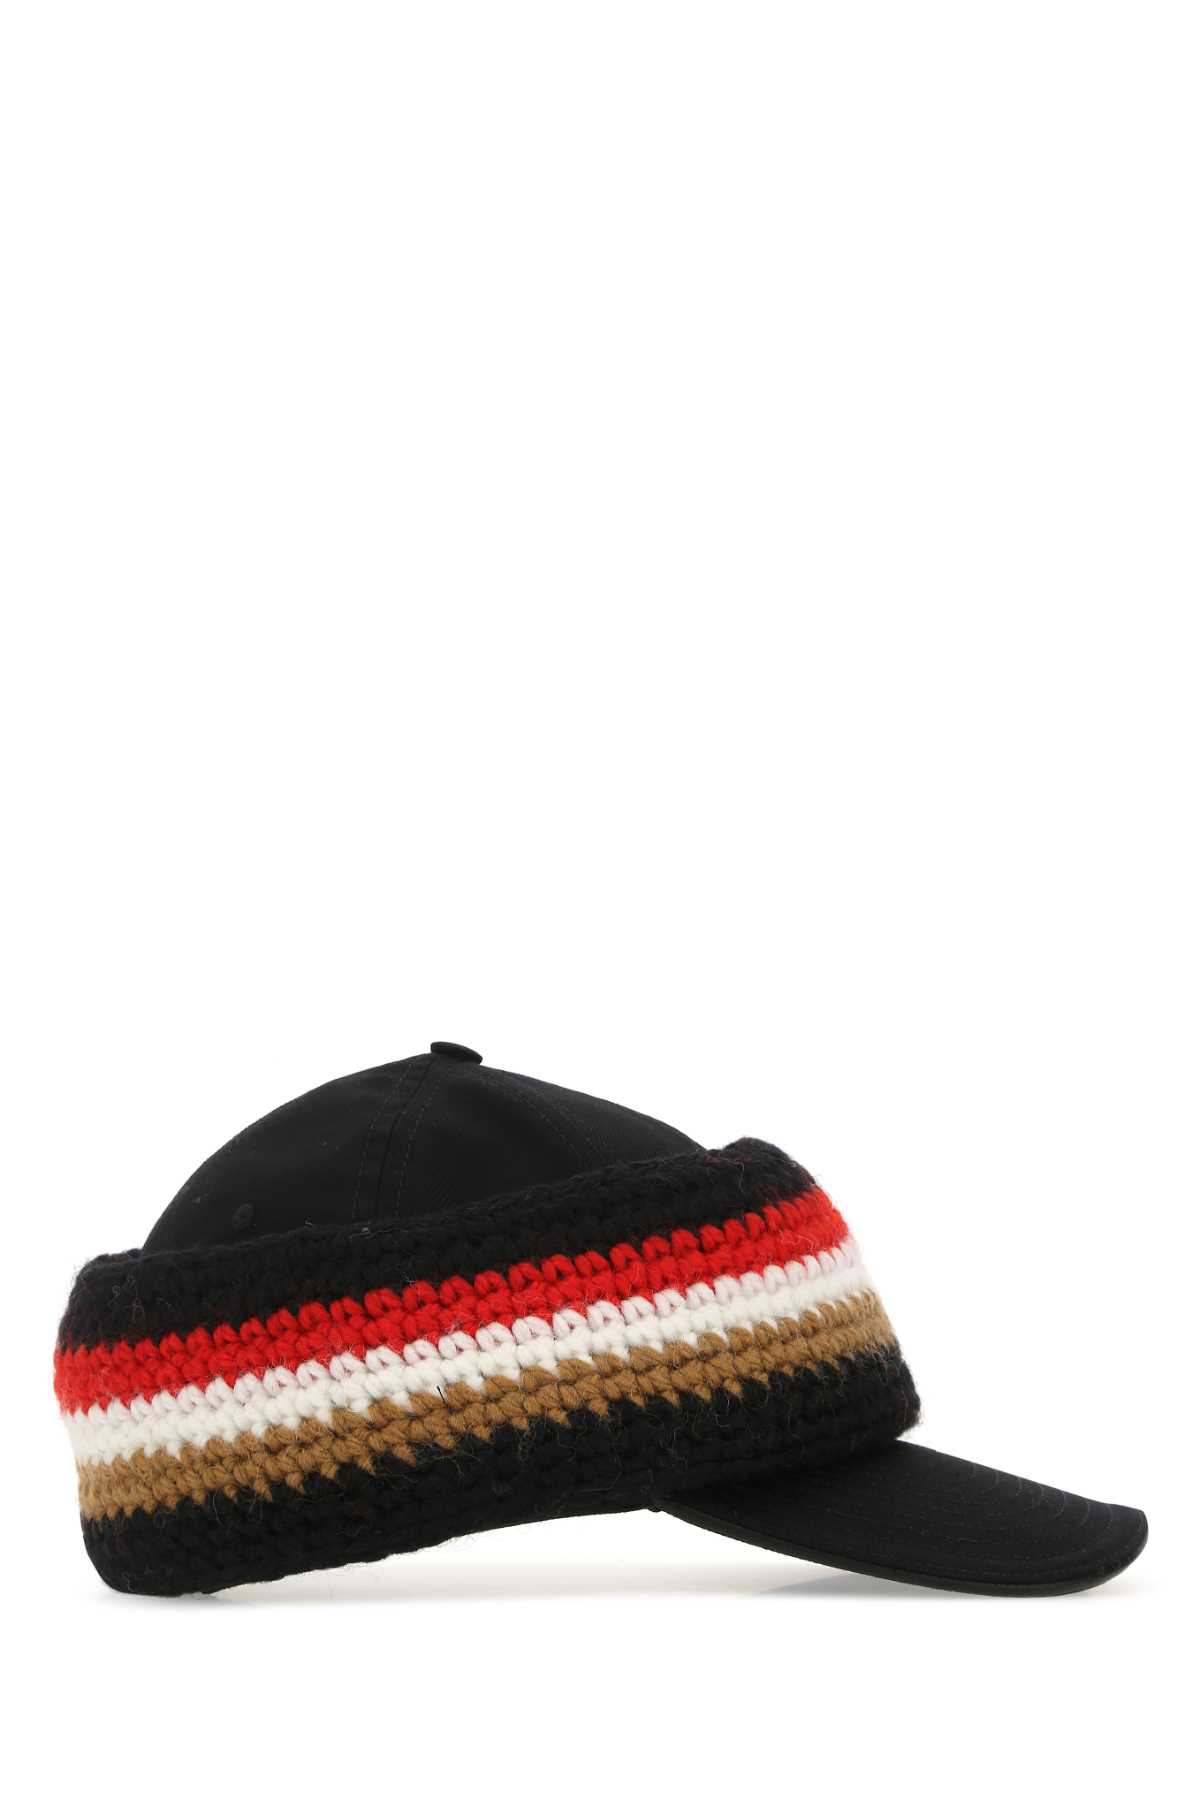 Shop Burberry Black Cotton Hat In A1189